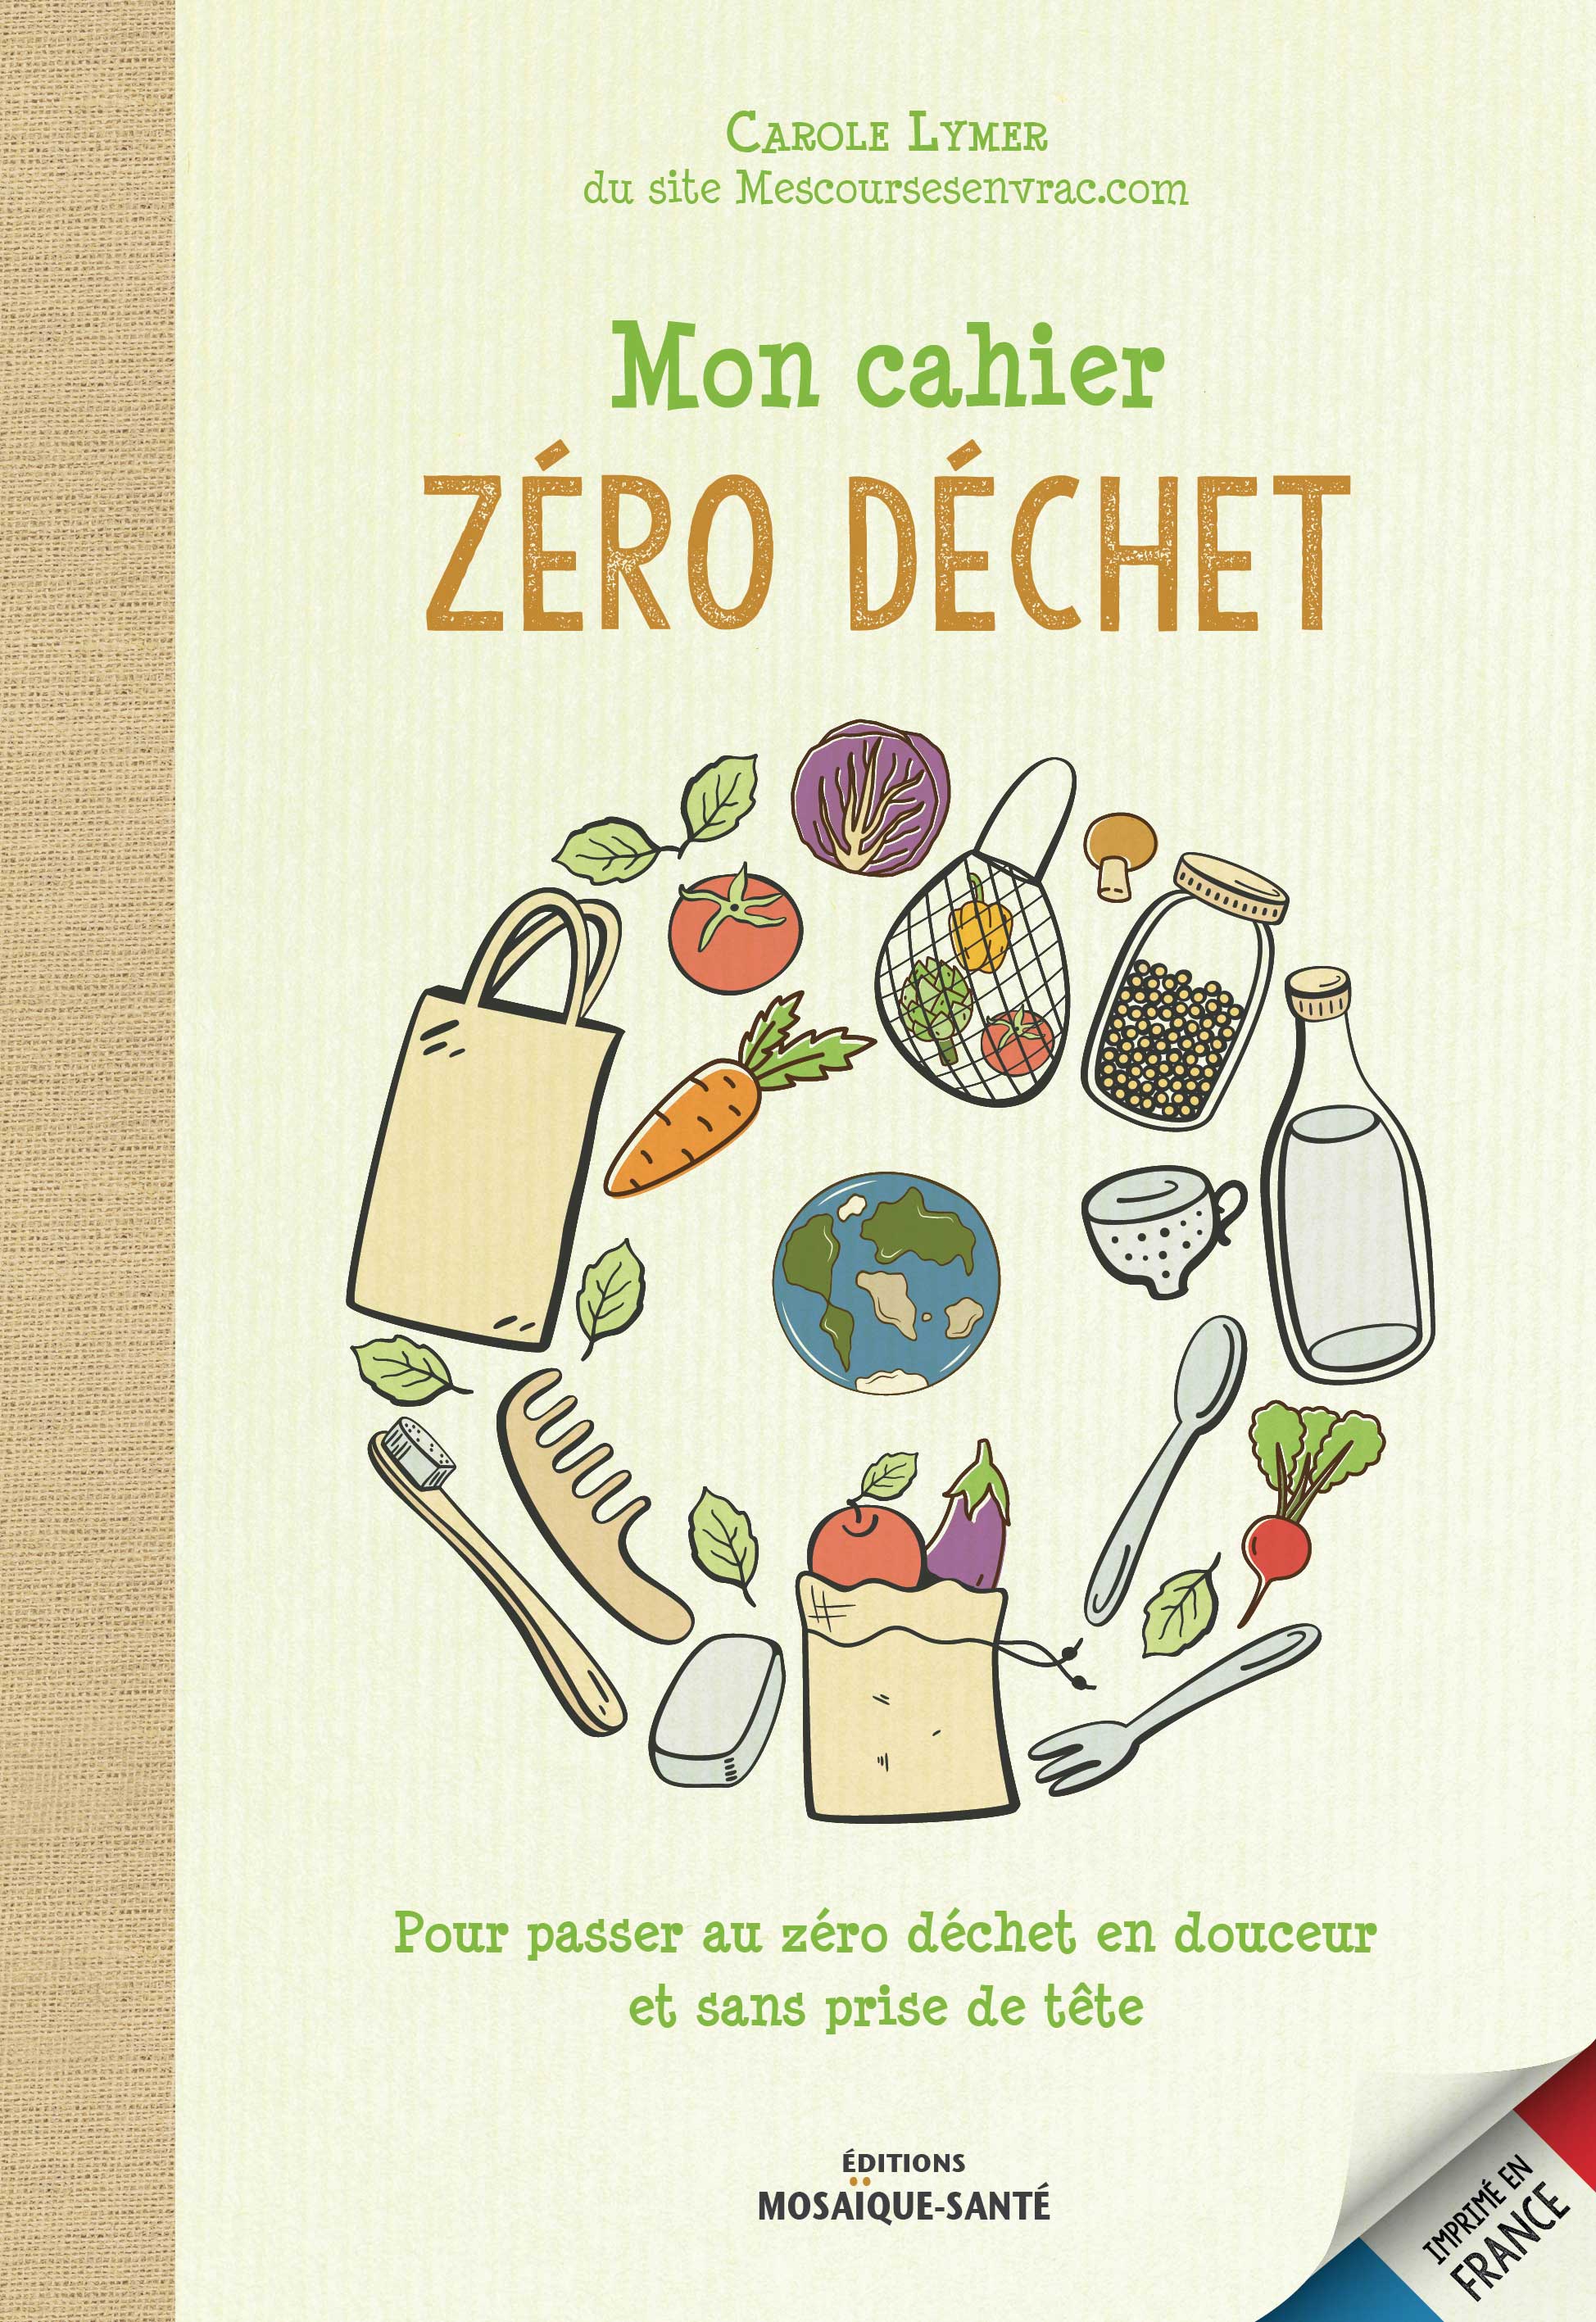 Mon cahier Zéro déchet de Carole Lymer du site Mescoursesenvrac.com